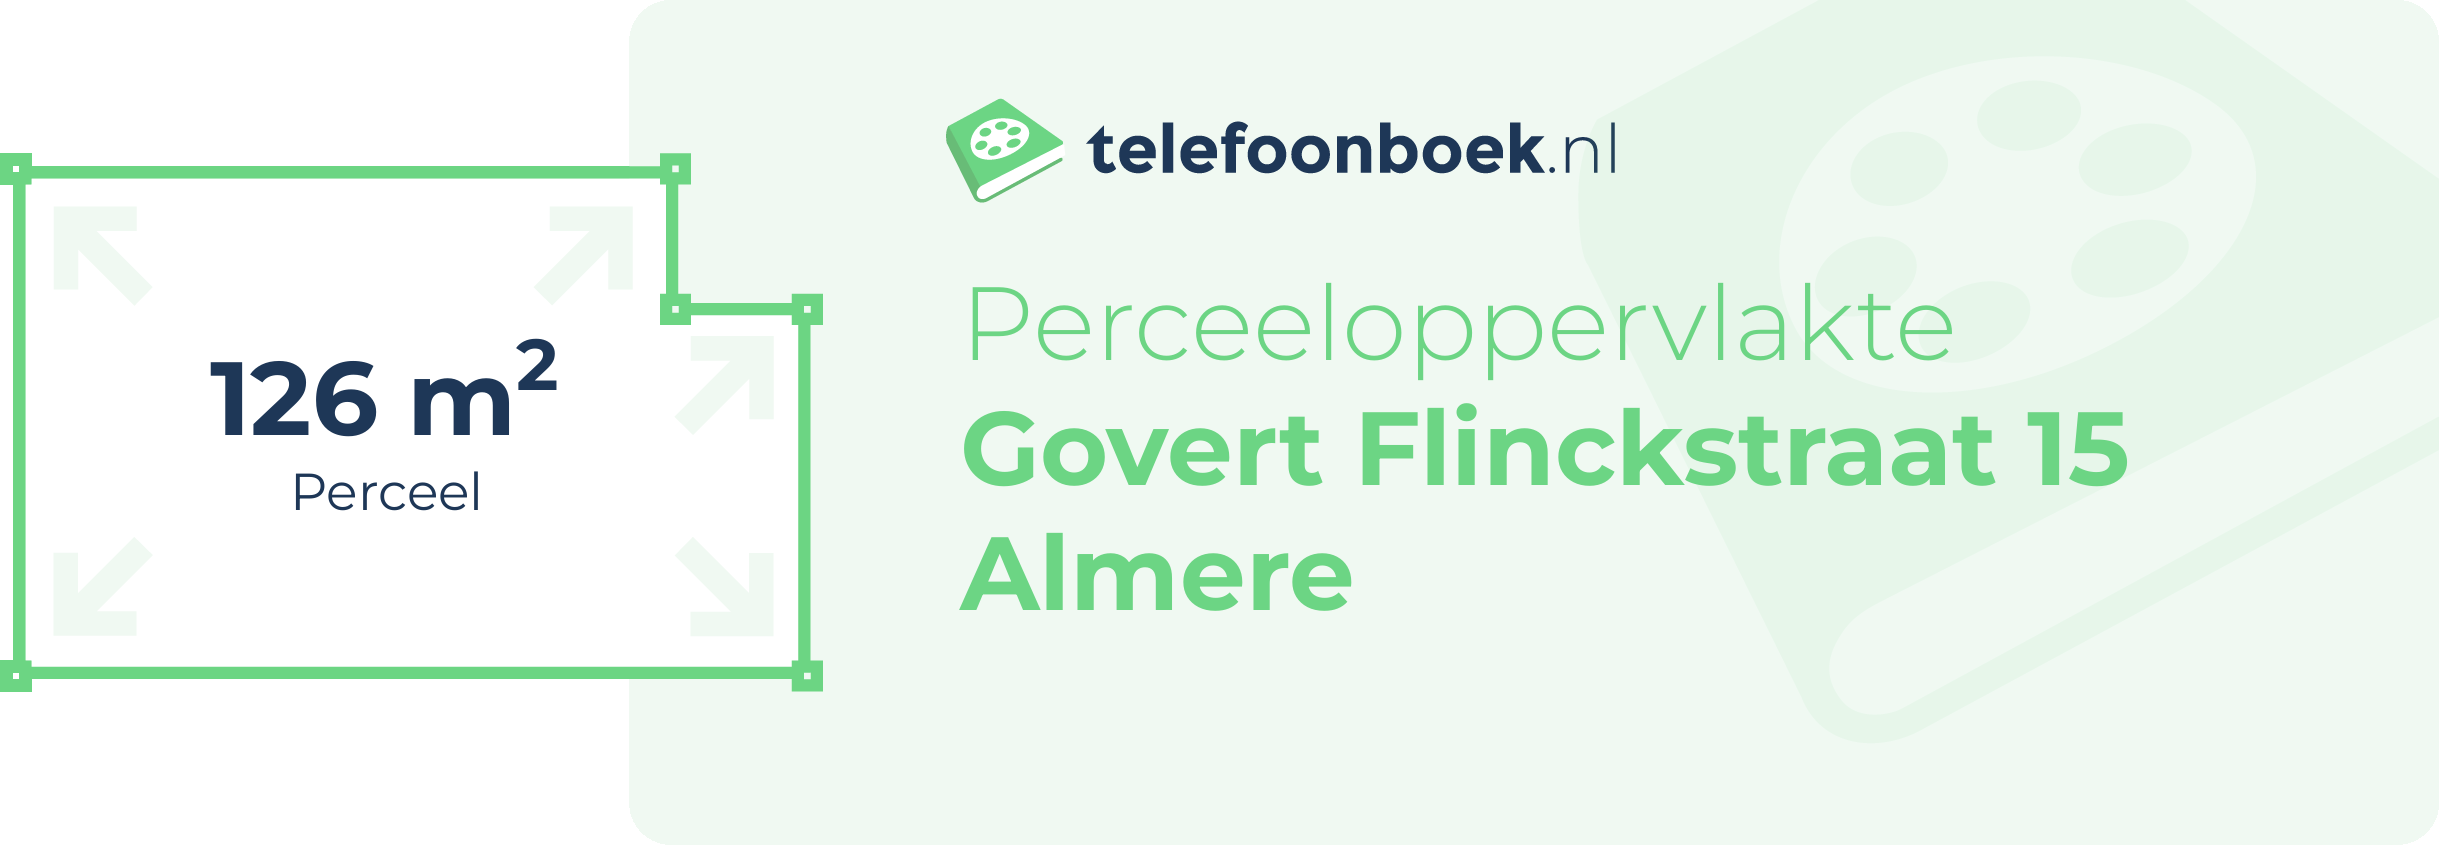 Perceeloppervlakte Govert Flinckstraat 15 Almere